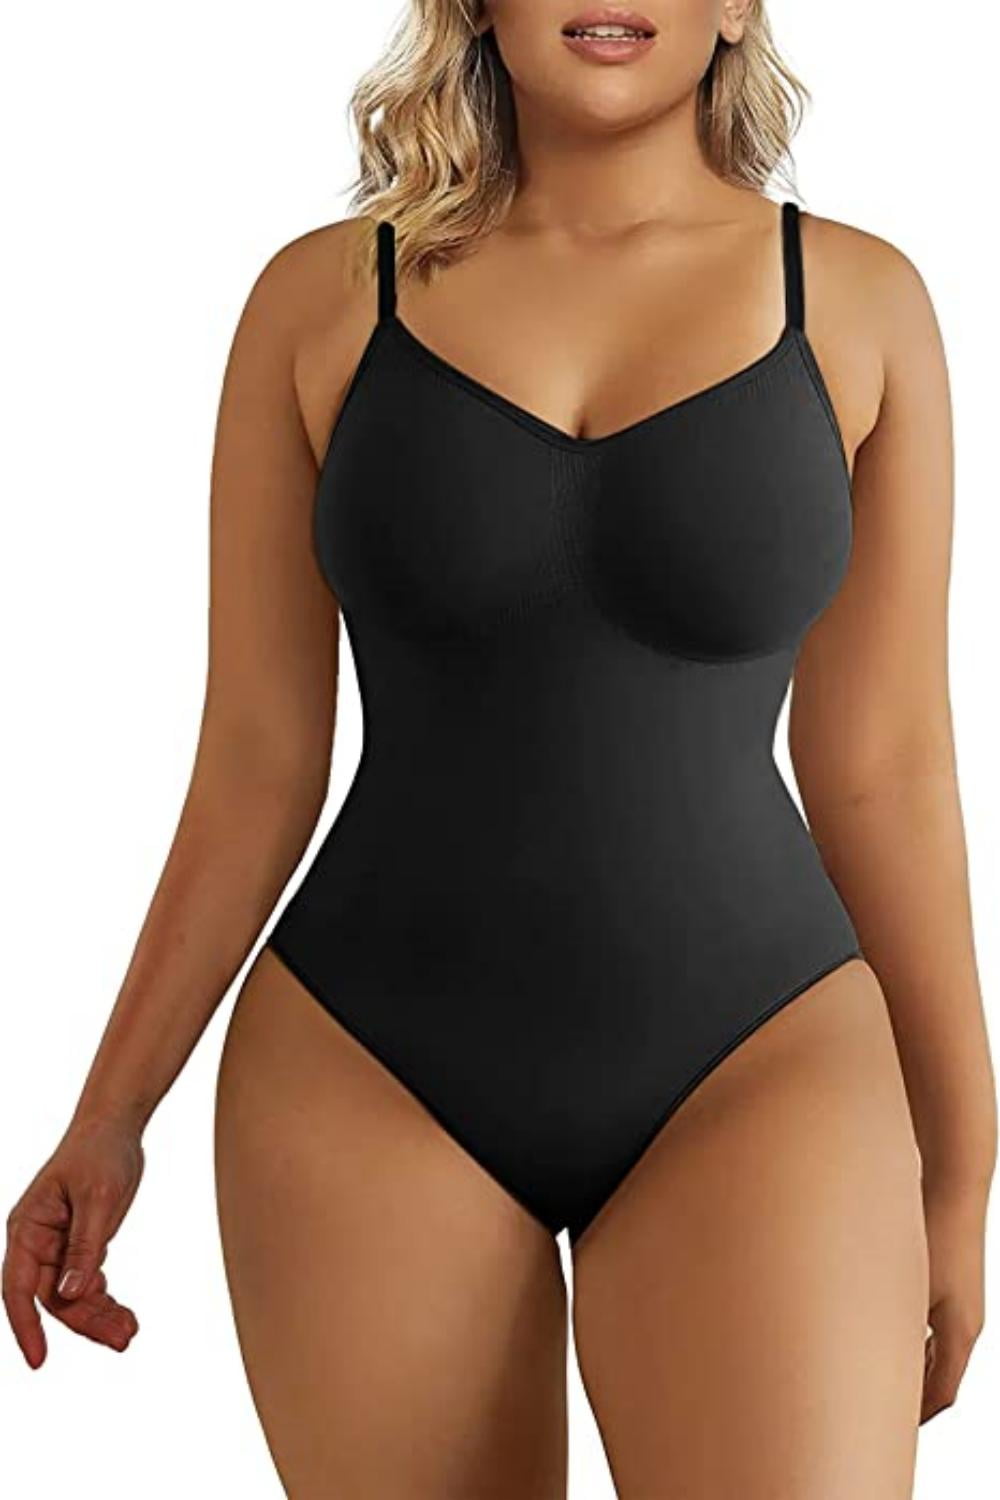 HESHPAWS Bodysuit for Women Tummy Control Shapewear Seamless Sculpting  Thong Body Shaper Tank Top 